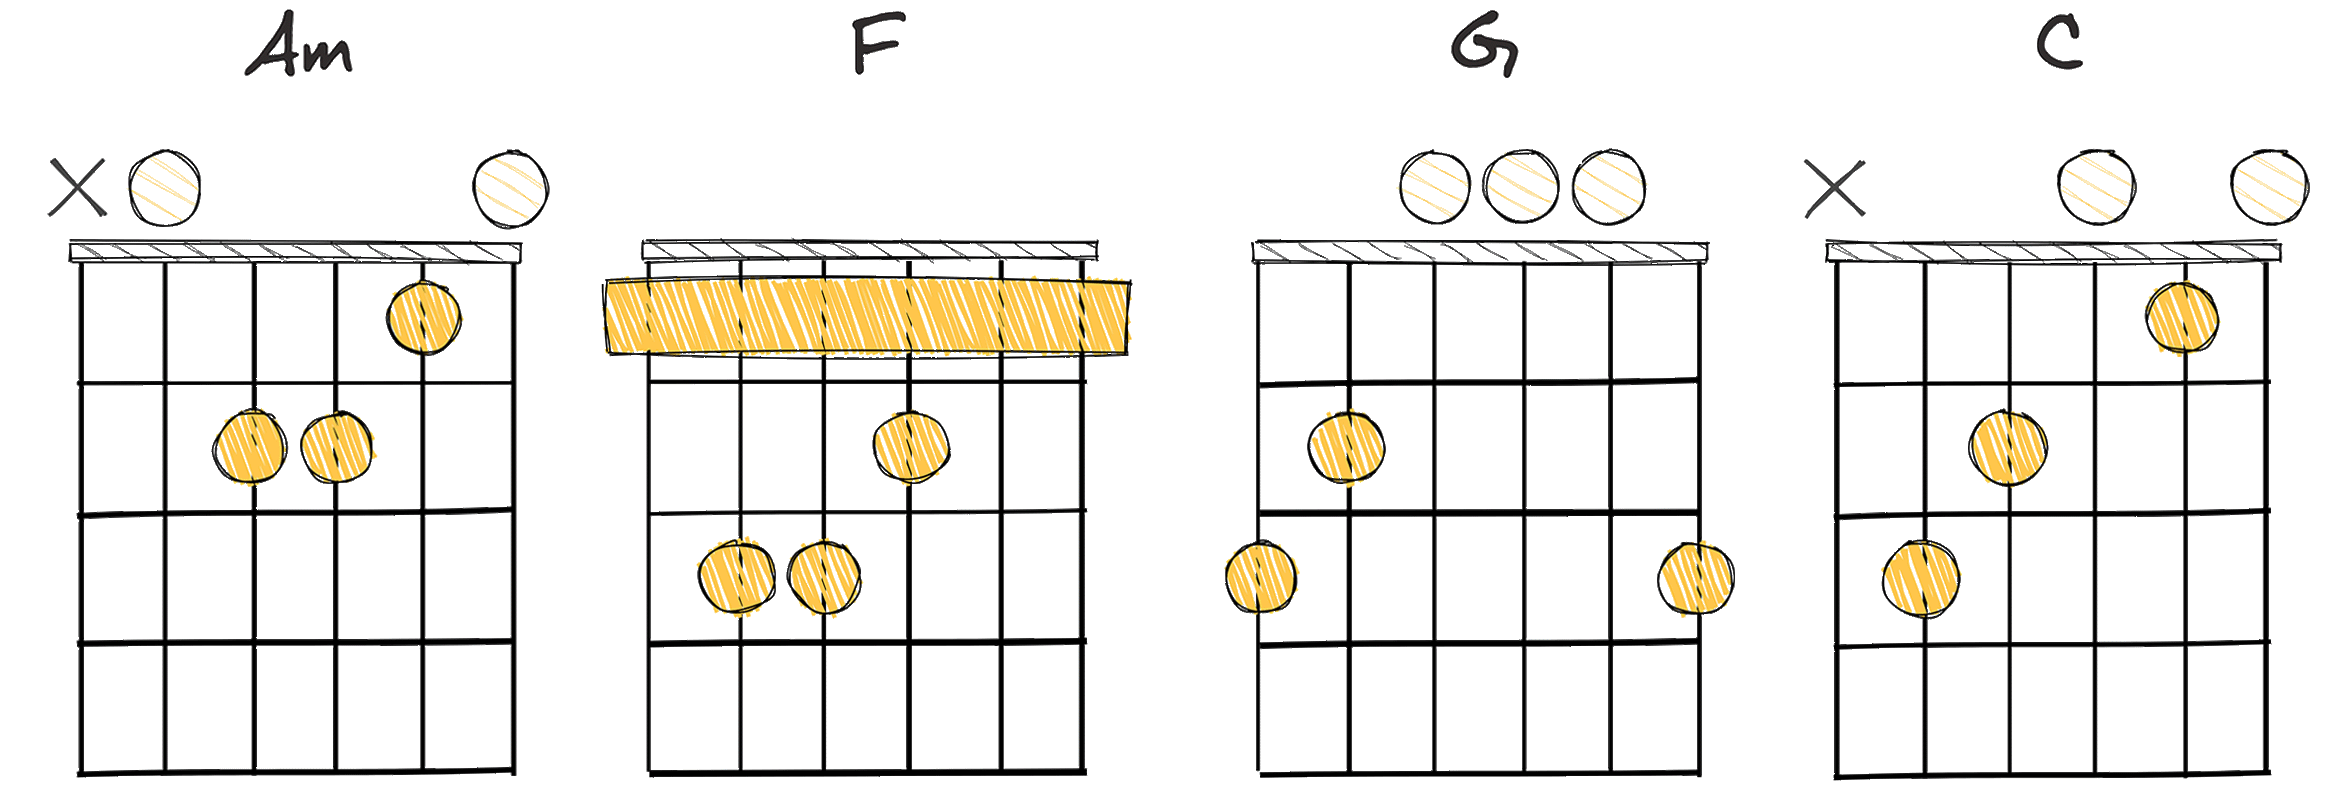 vi - IV - V - I (6-4-5-1) chords diagram